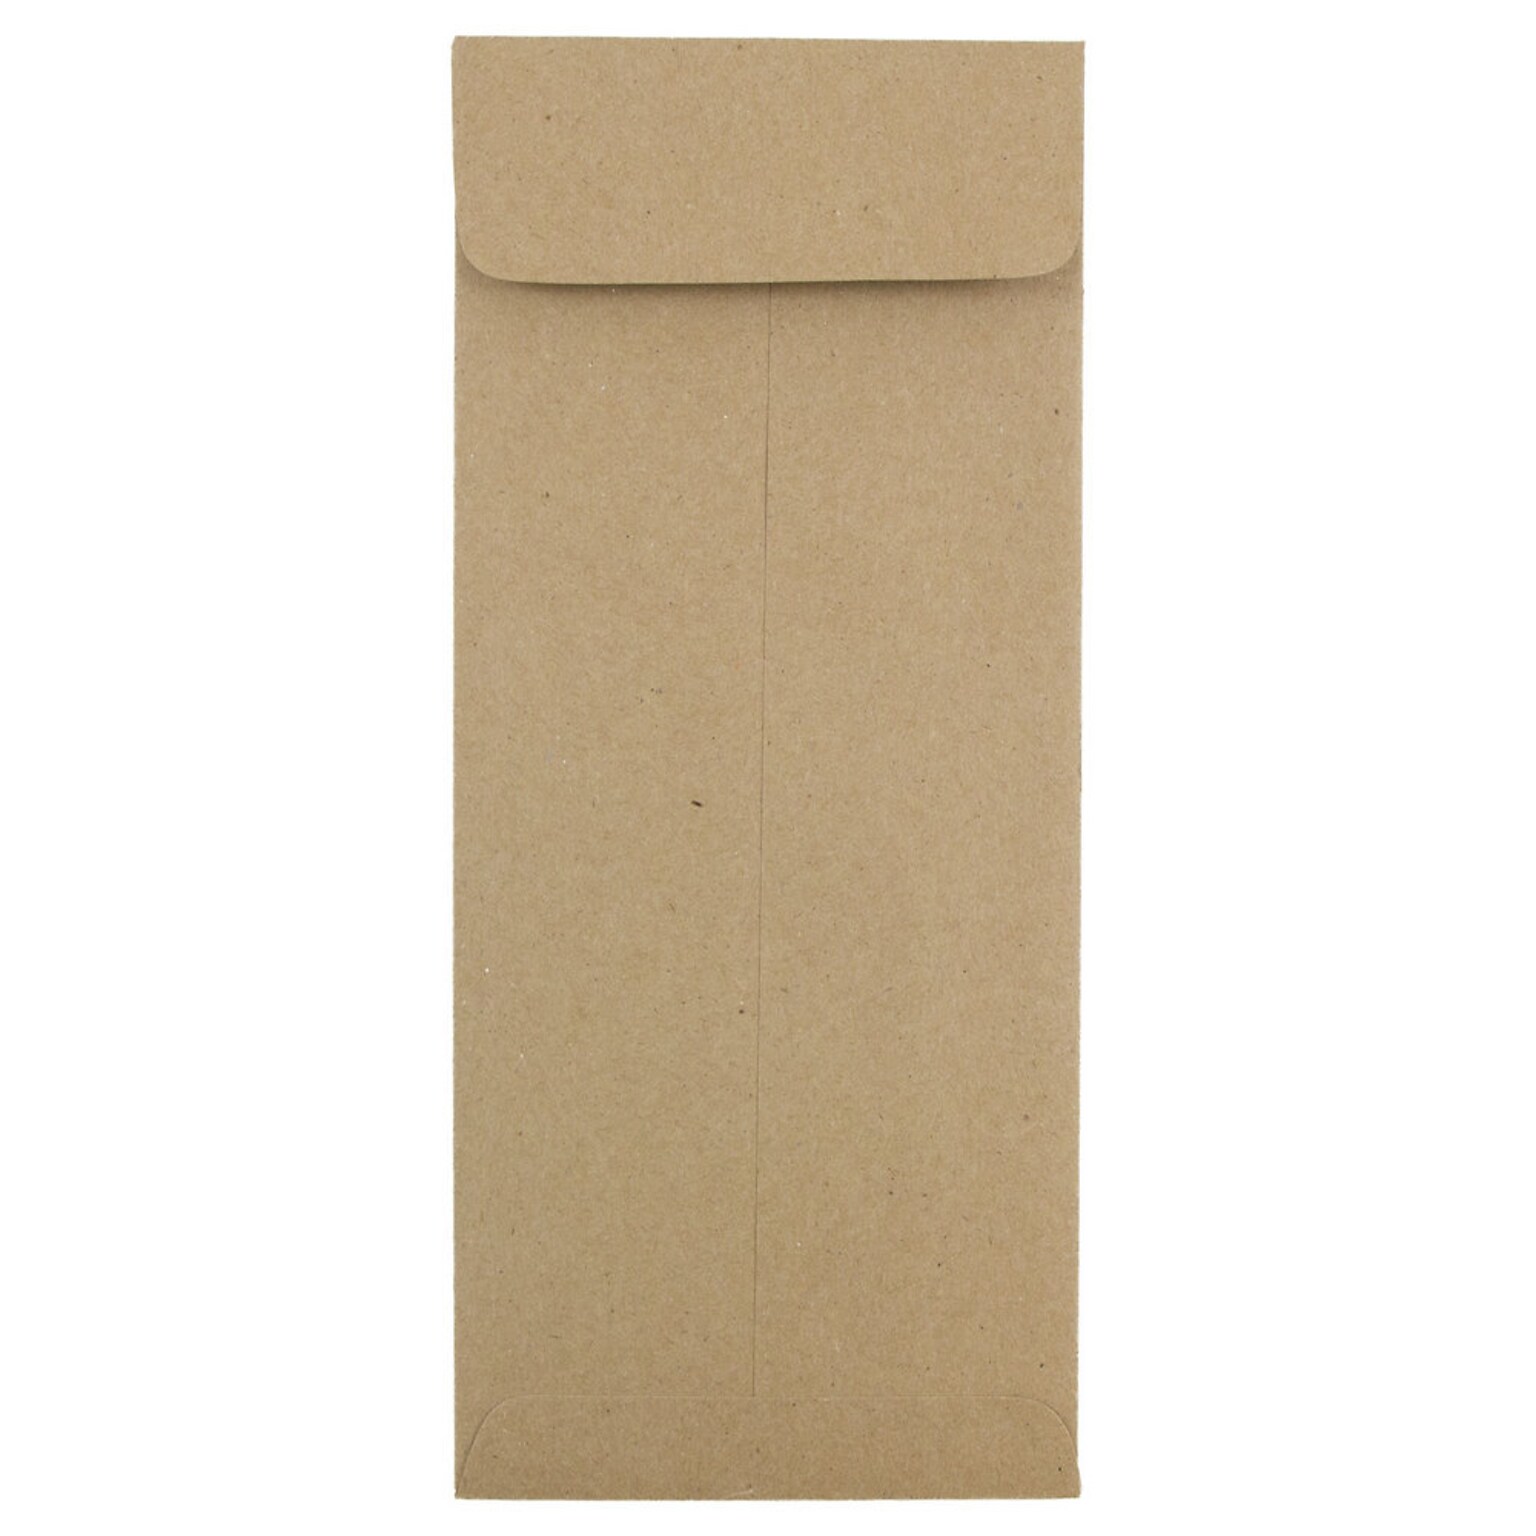 JAM Paper Open End #10 Currency Envelope, 4 1/8 x 9 1/2, Brown Kraft Paper Bag, 500/Pack (3965615H)